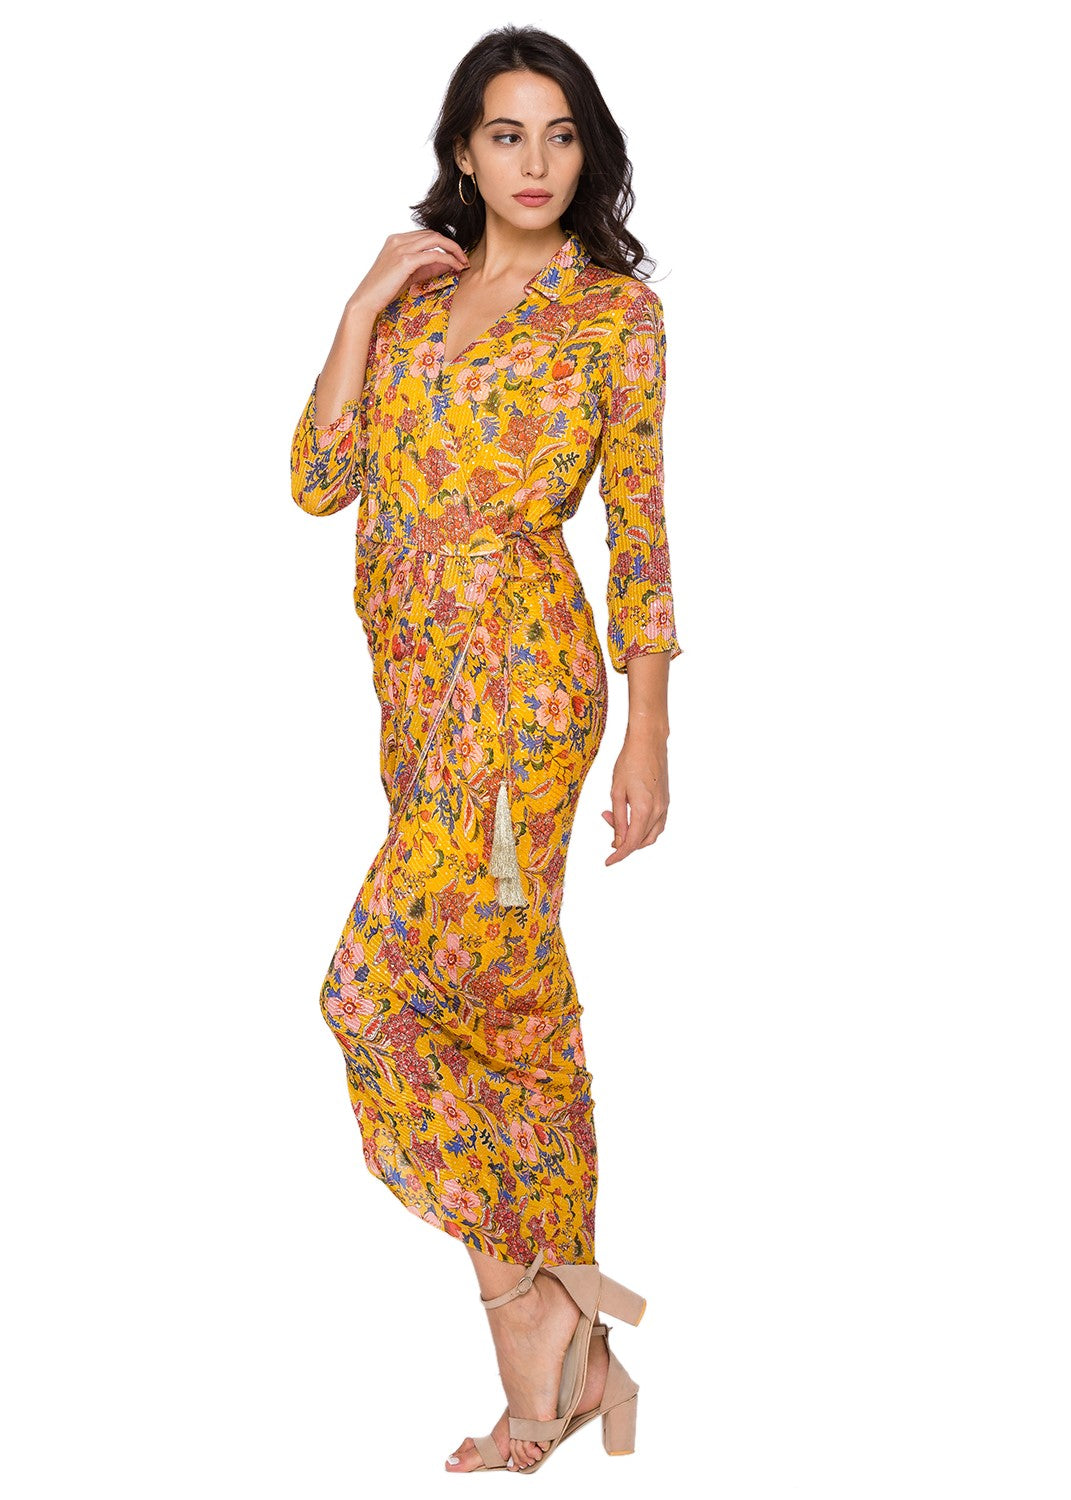 Azalea Floral Overlap Printed Drape Dress With Side Tie Up